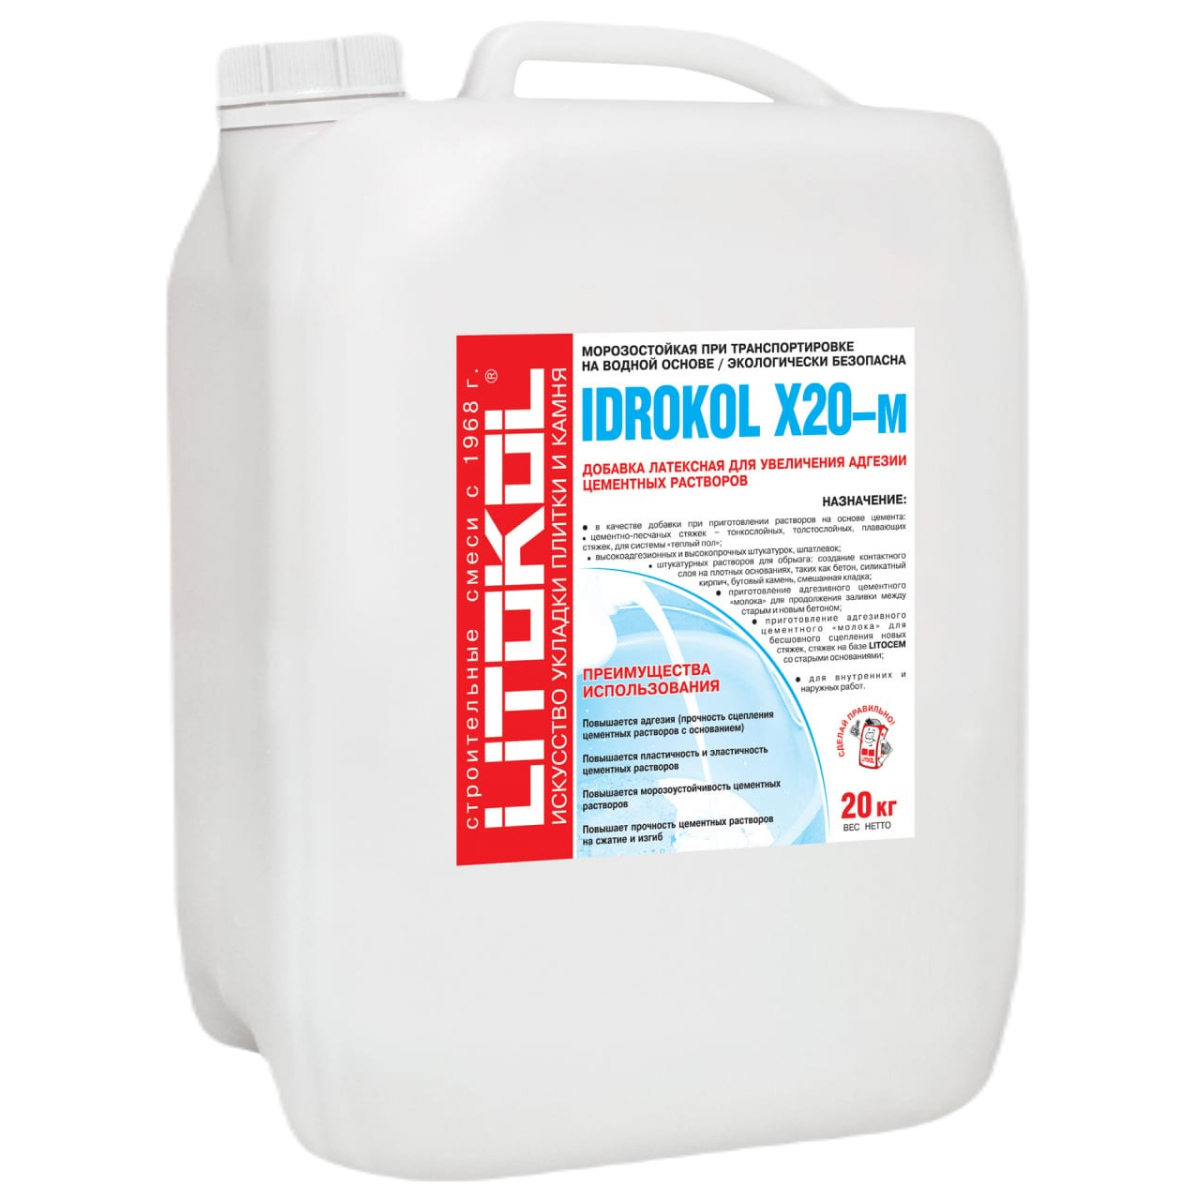 LITOKOL IDROKol X20-м-латексная добавка 20kg can 119300003